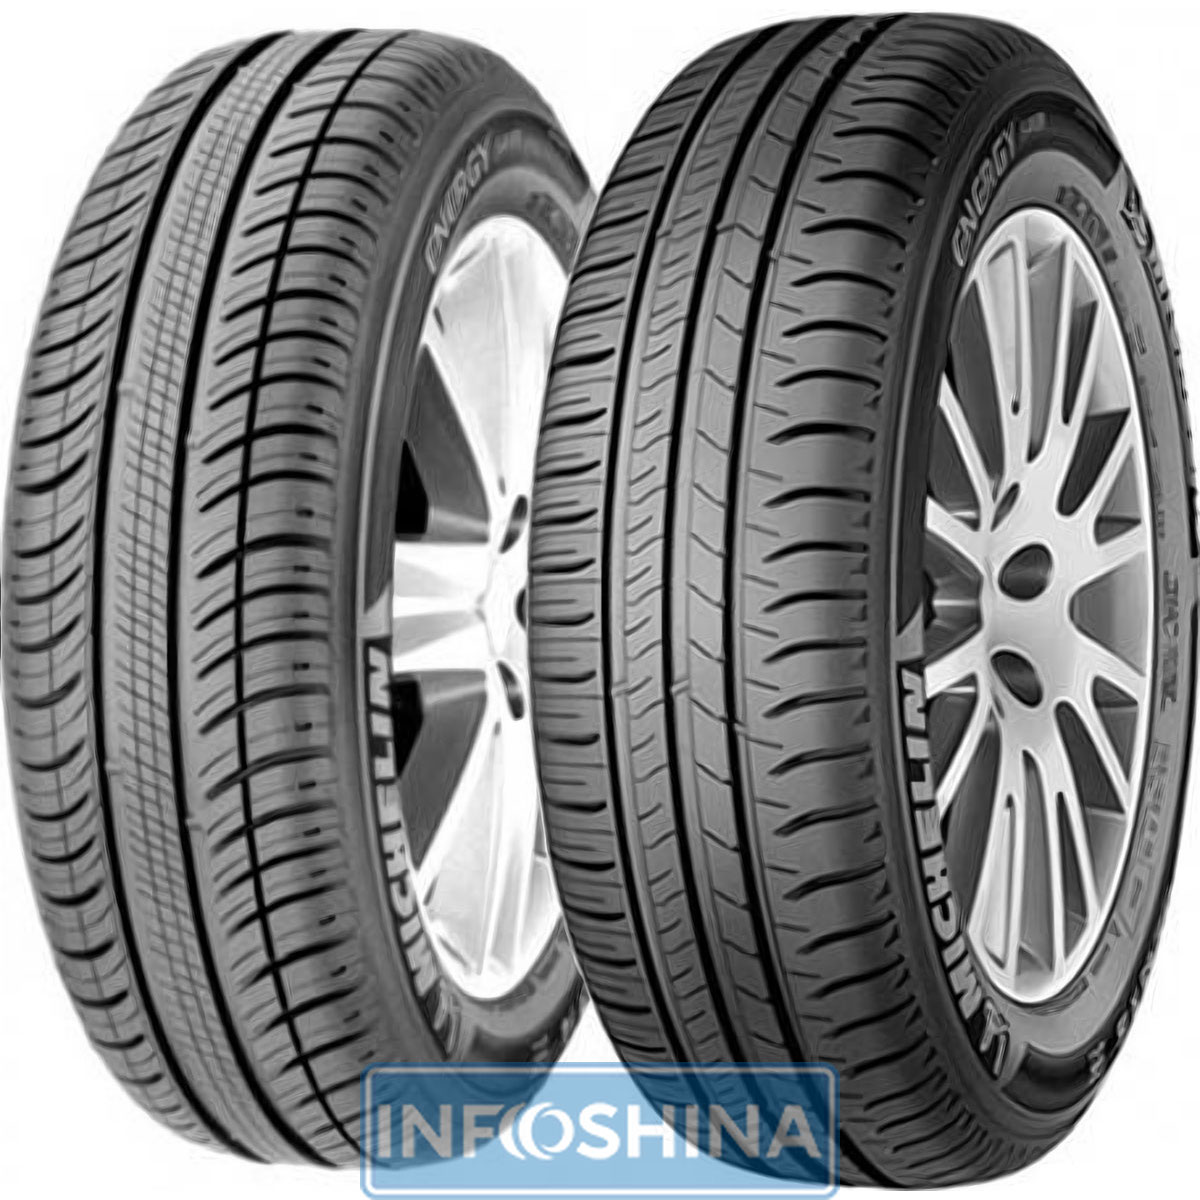 Купить шины Michelin Energy Saver 205/60 R16 96H